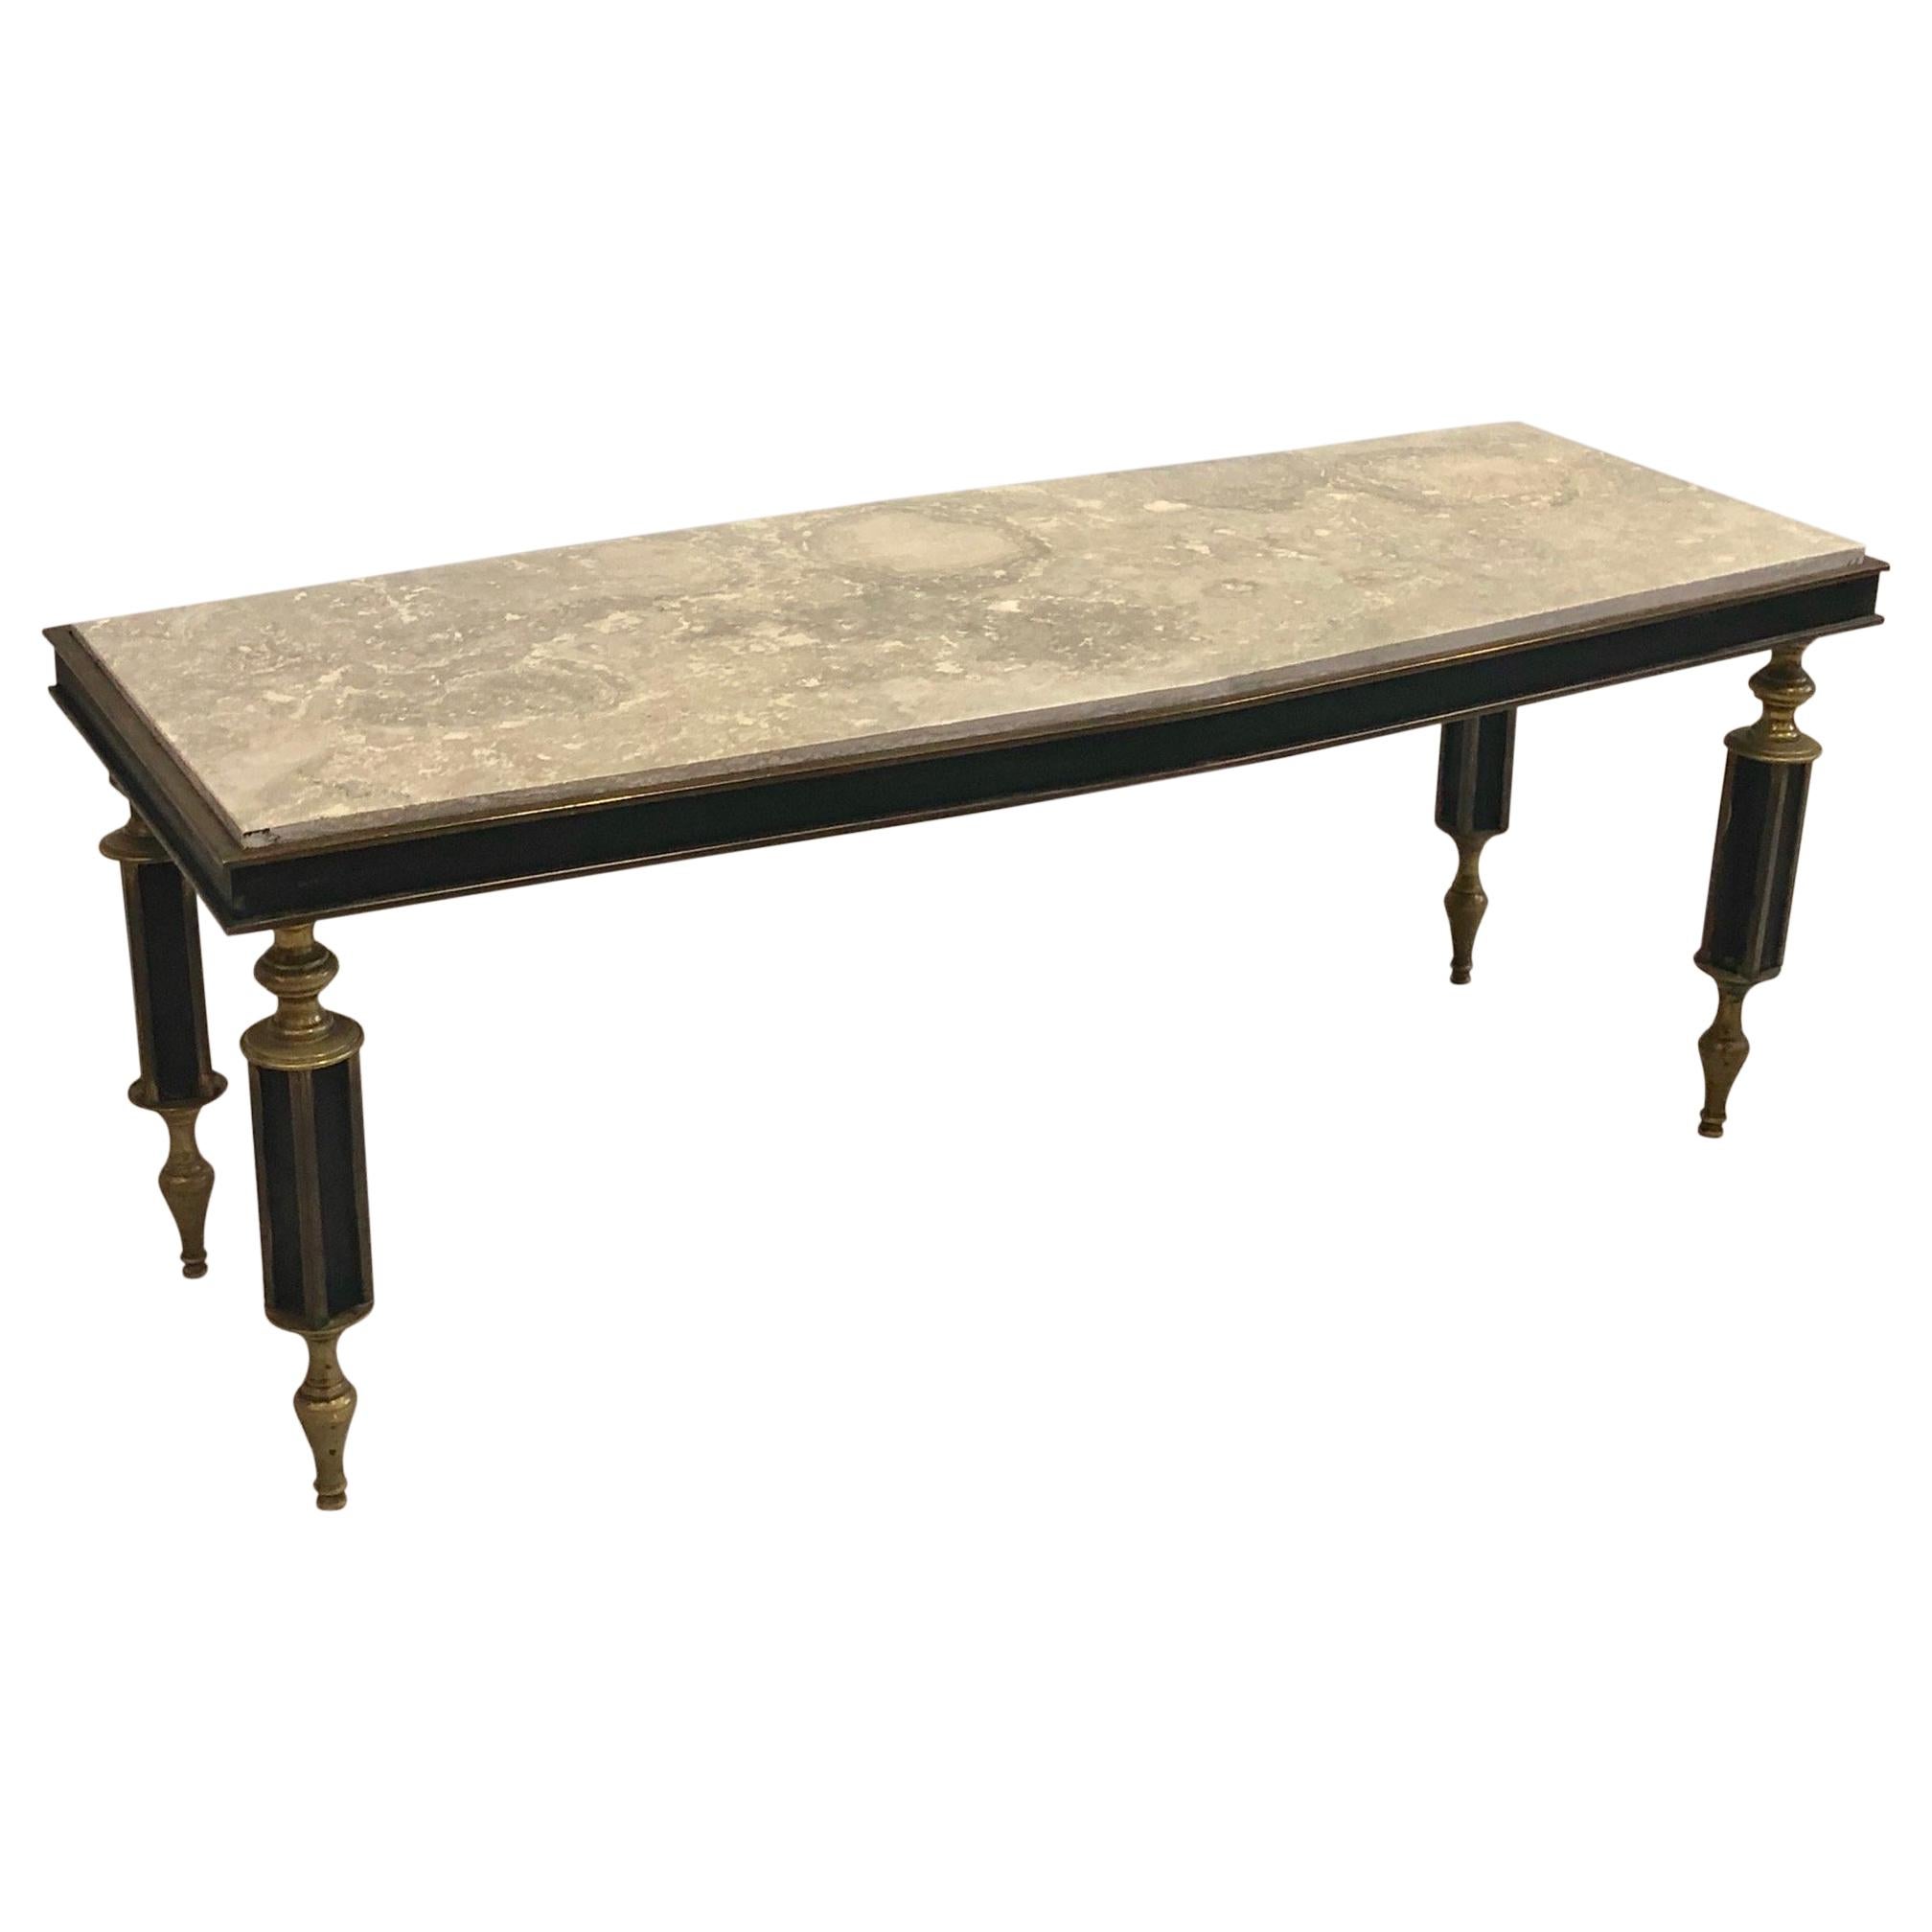 Rare Italian Modern Neoclassical Gilt Bronze Coffee Table Attr. to Gio Ponti